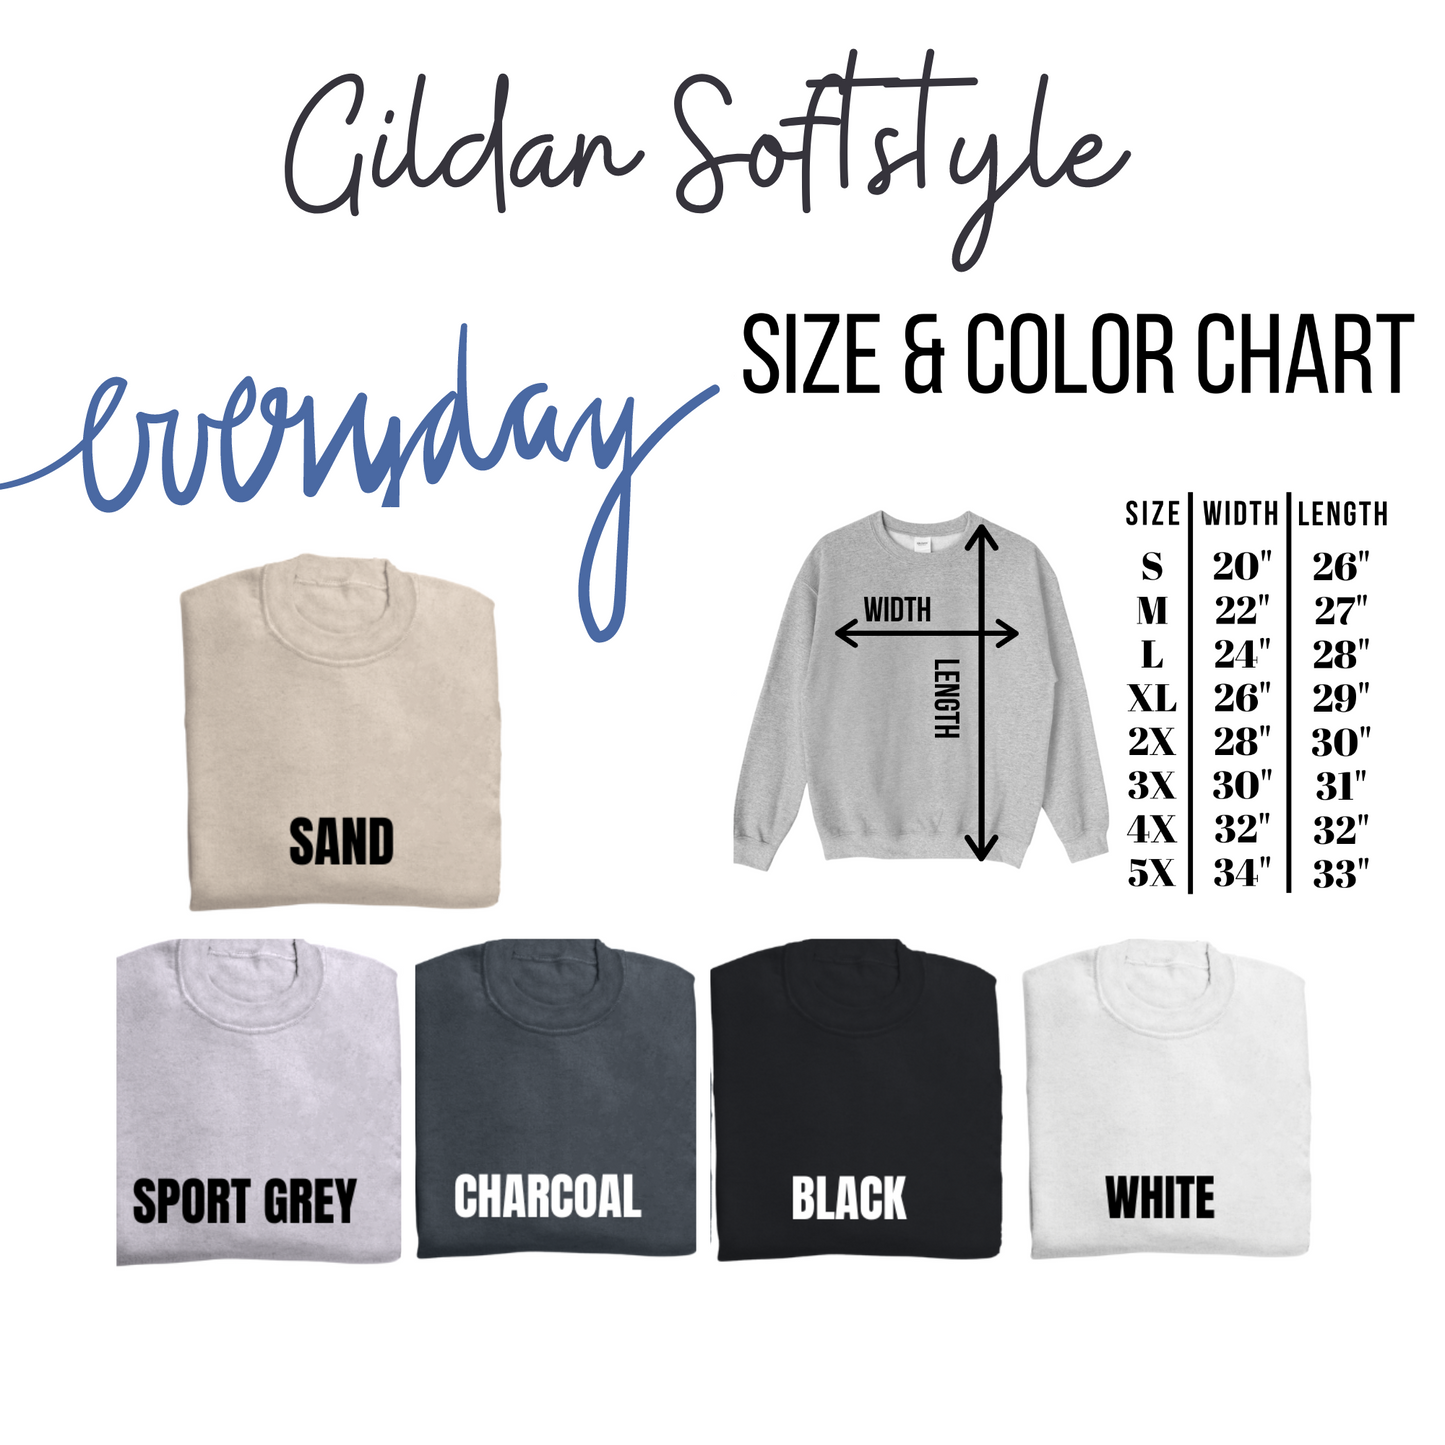 Game Day Wildcats Gildan Softstyle Sweatshirt or T-shirt